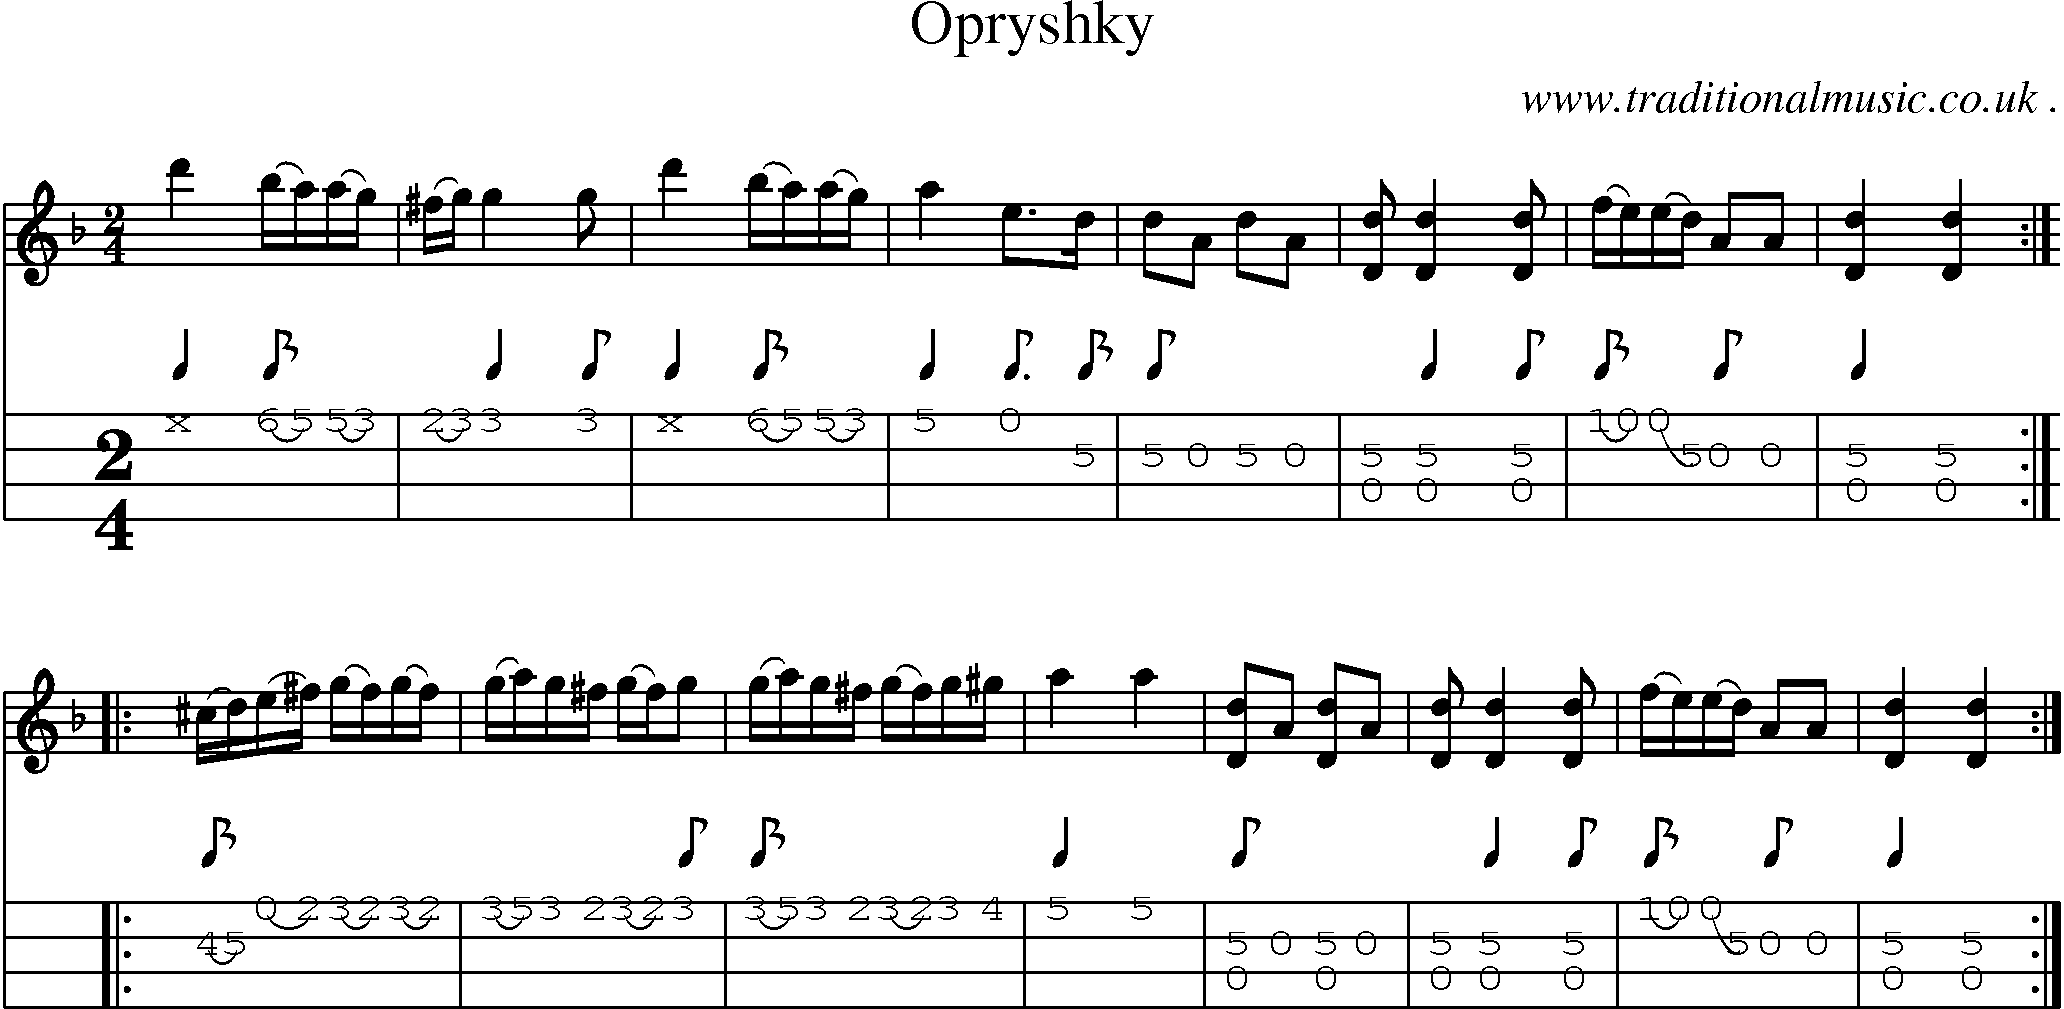 Sheet-Music and Mandolin Tabs for Opryshky